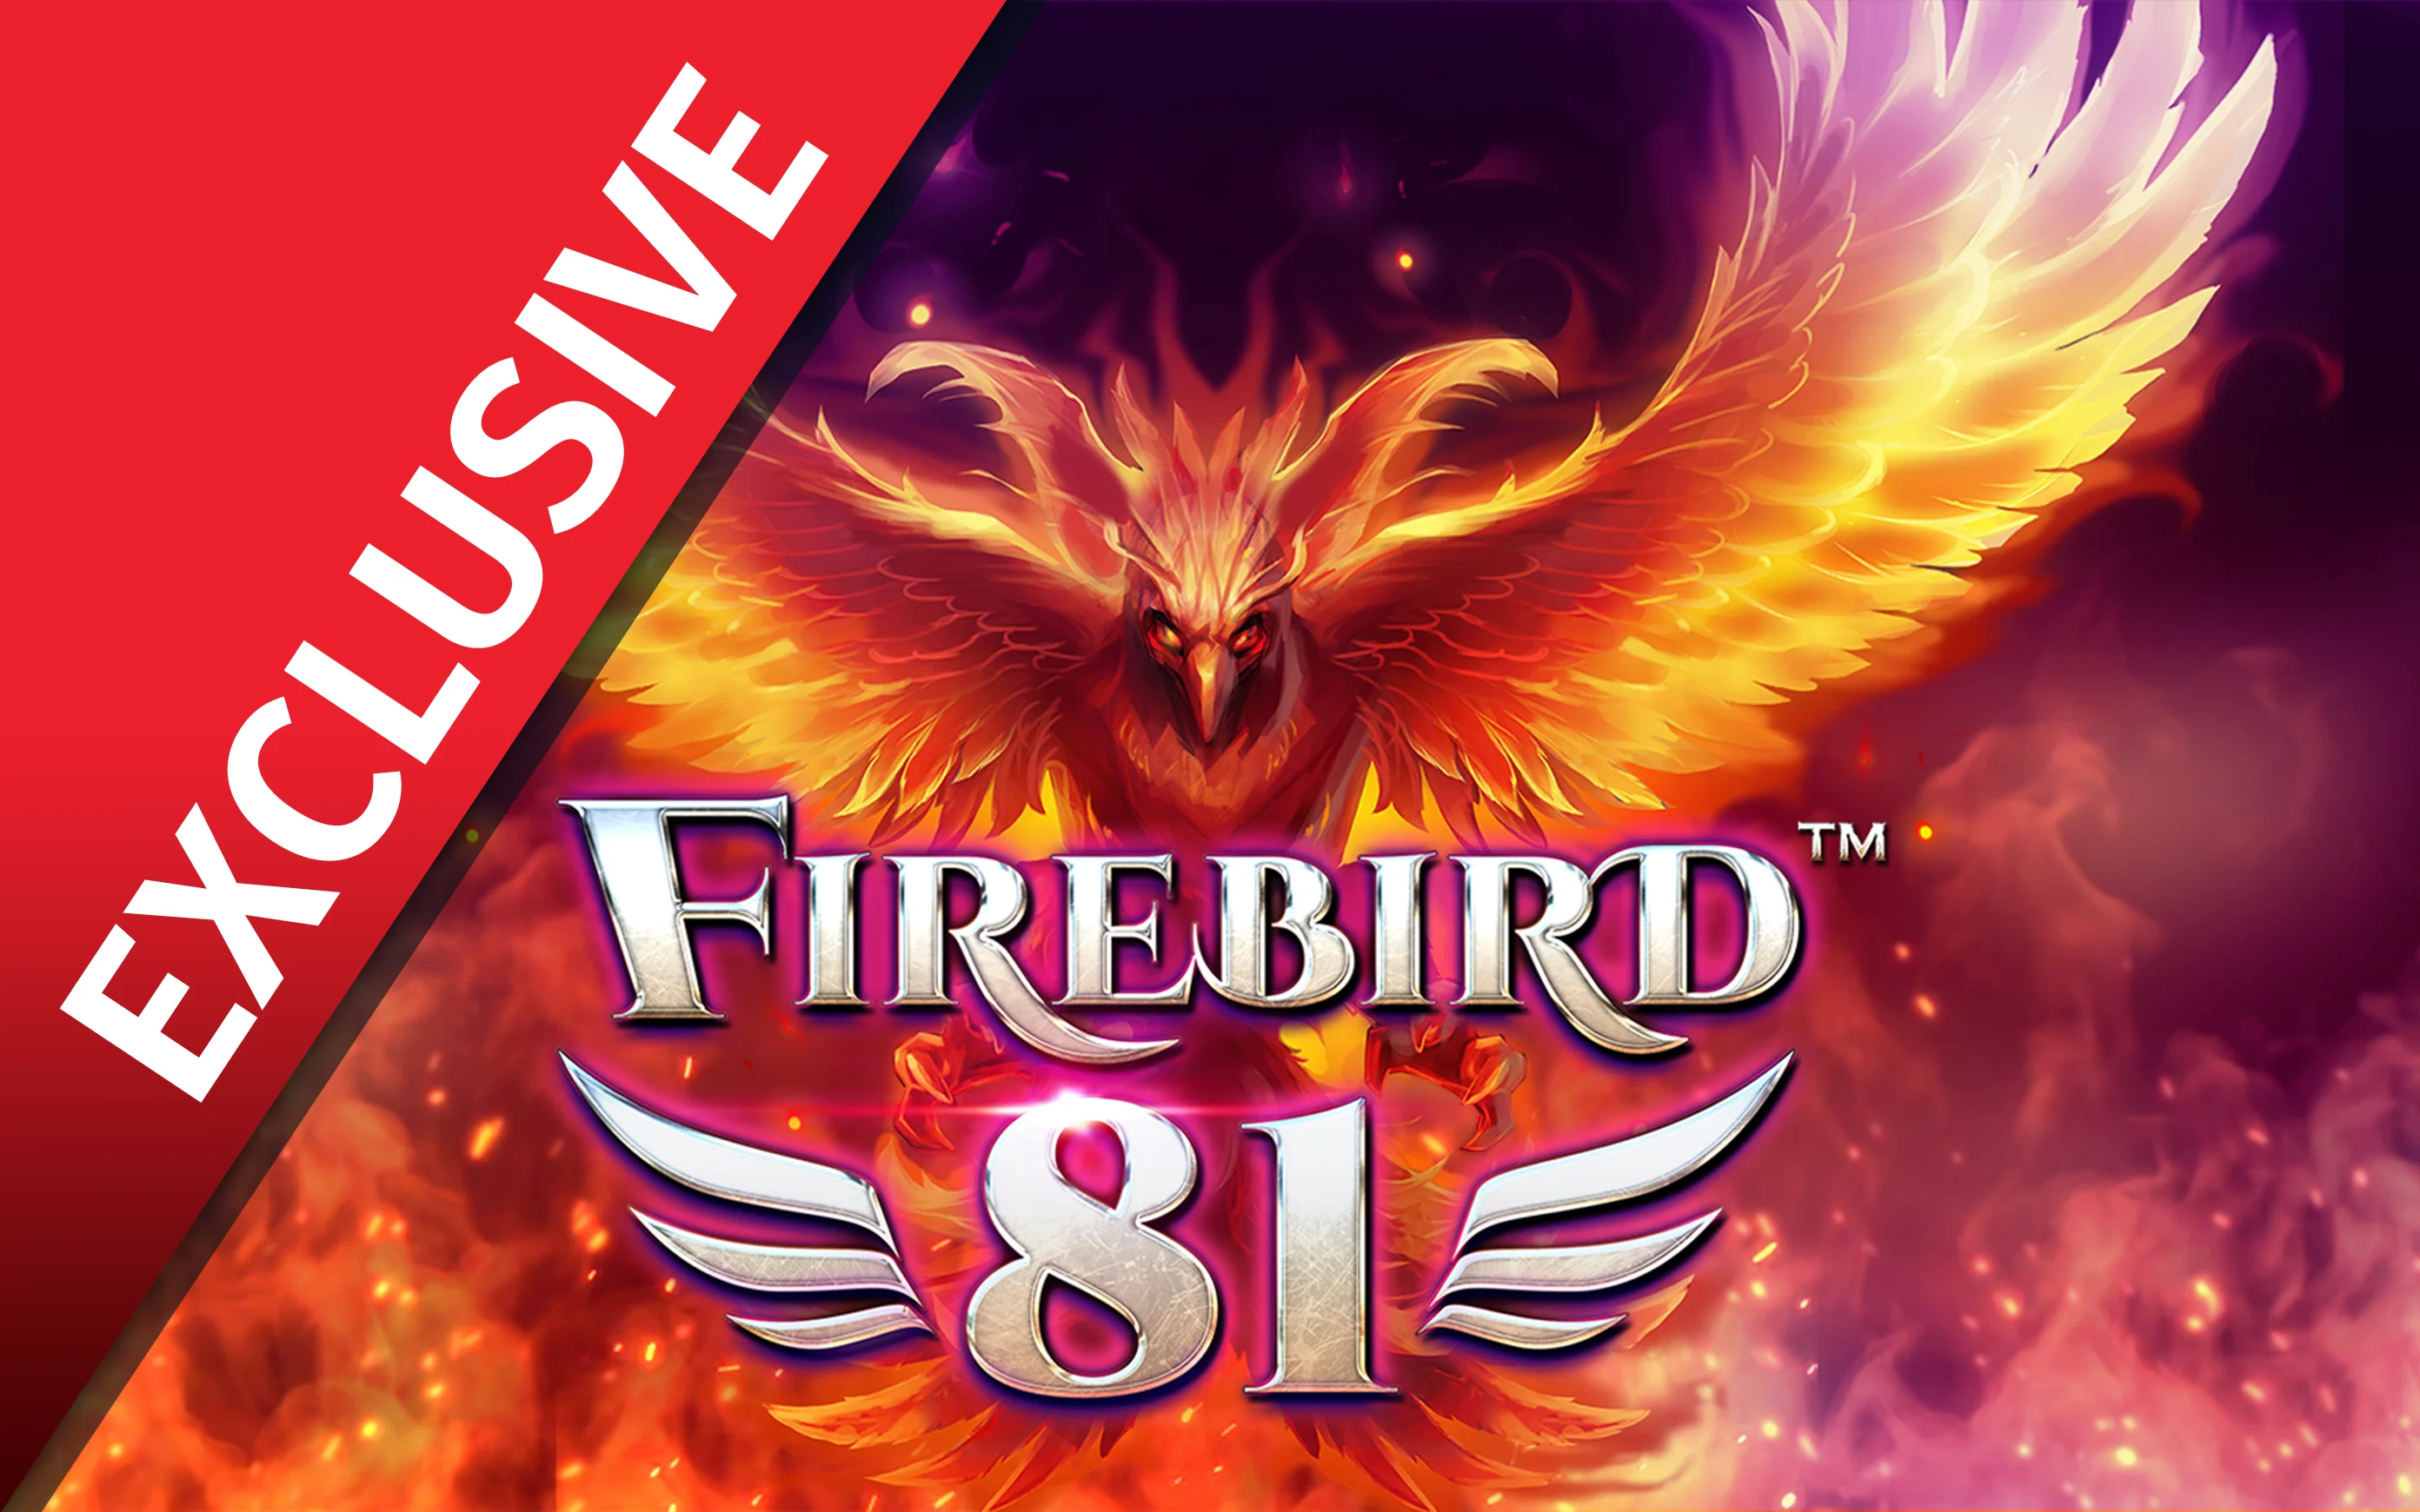 Play Firebird 81 on Starcasino.be online casino